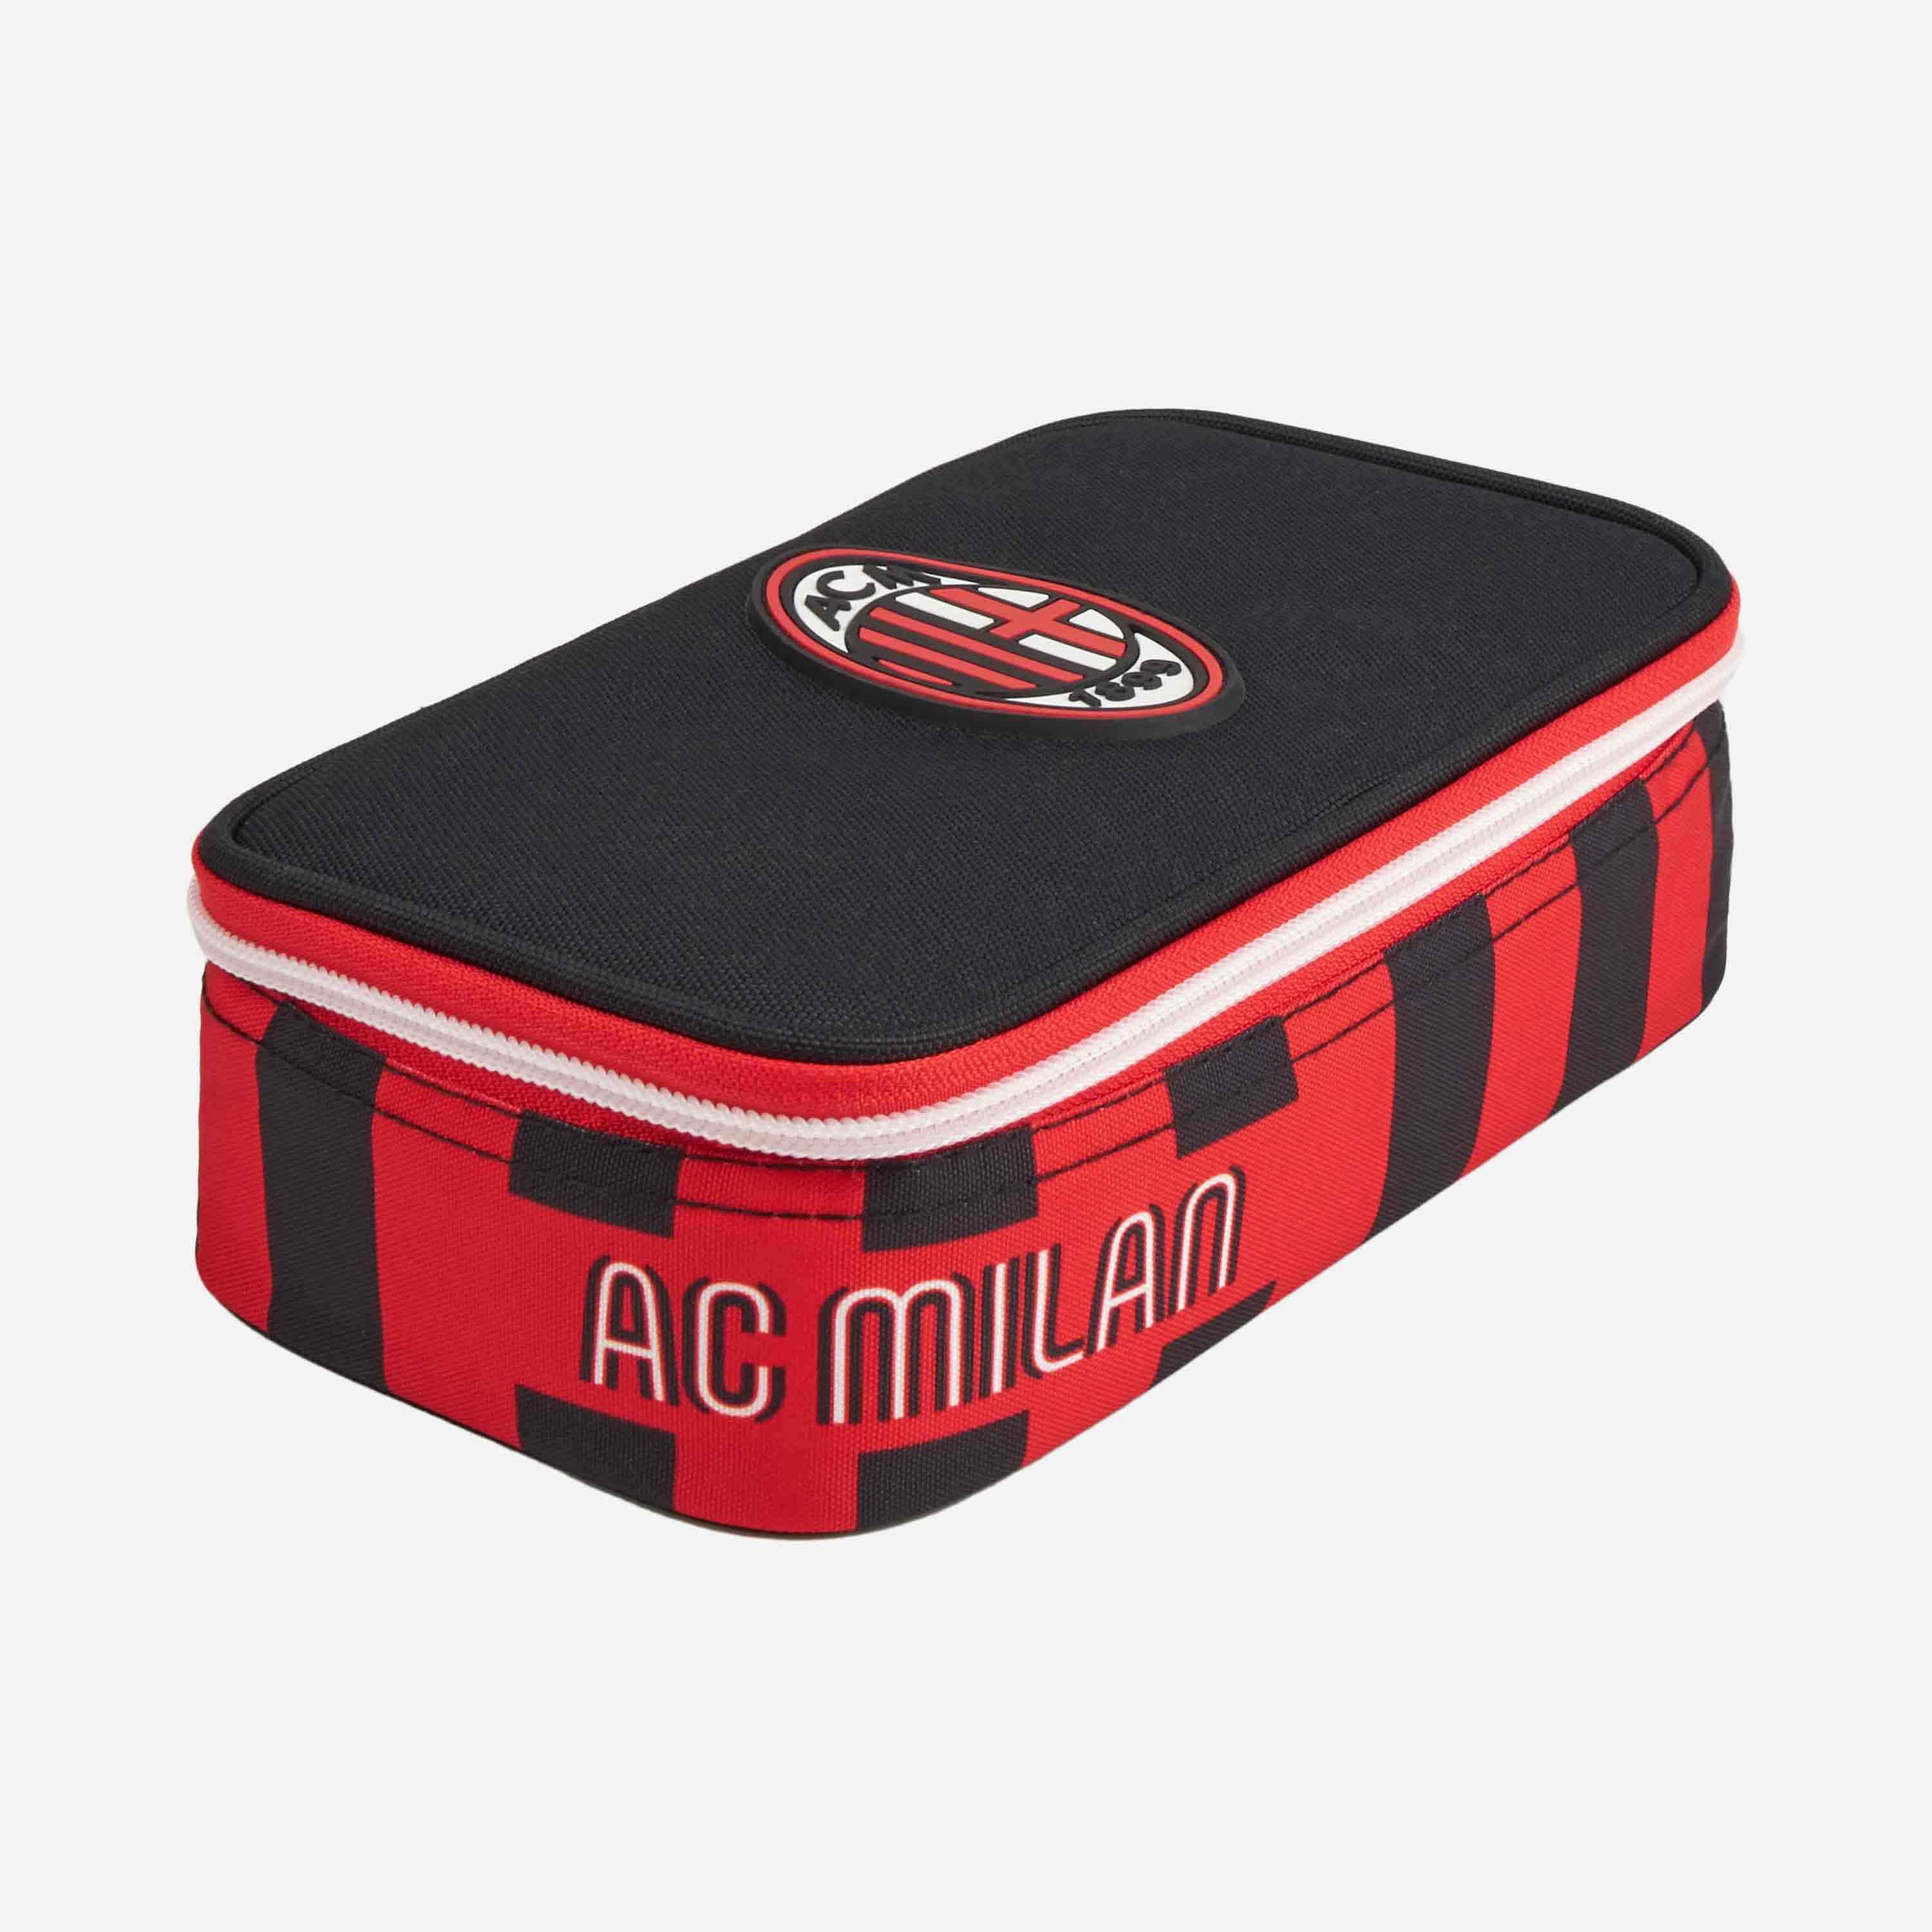 AC Milan Pencil Case